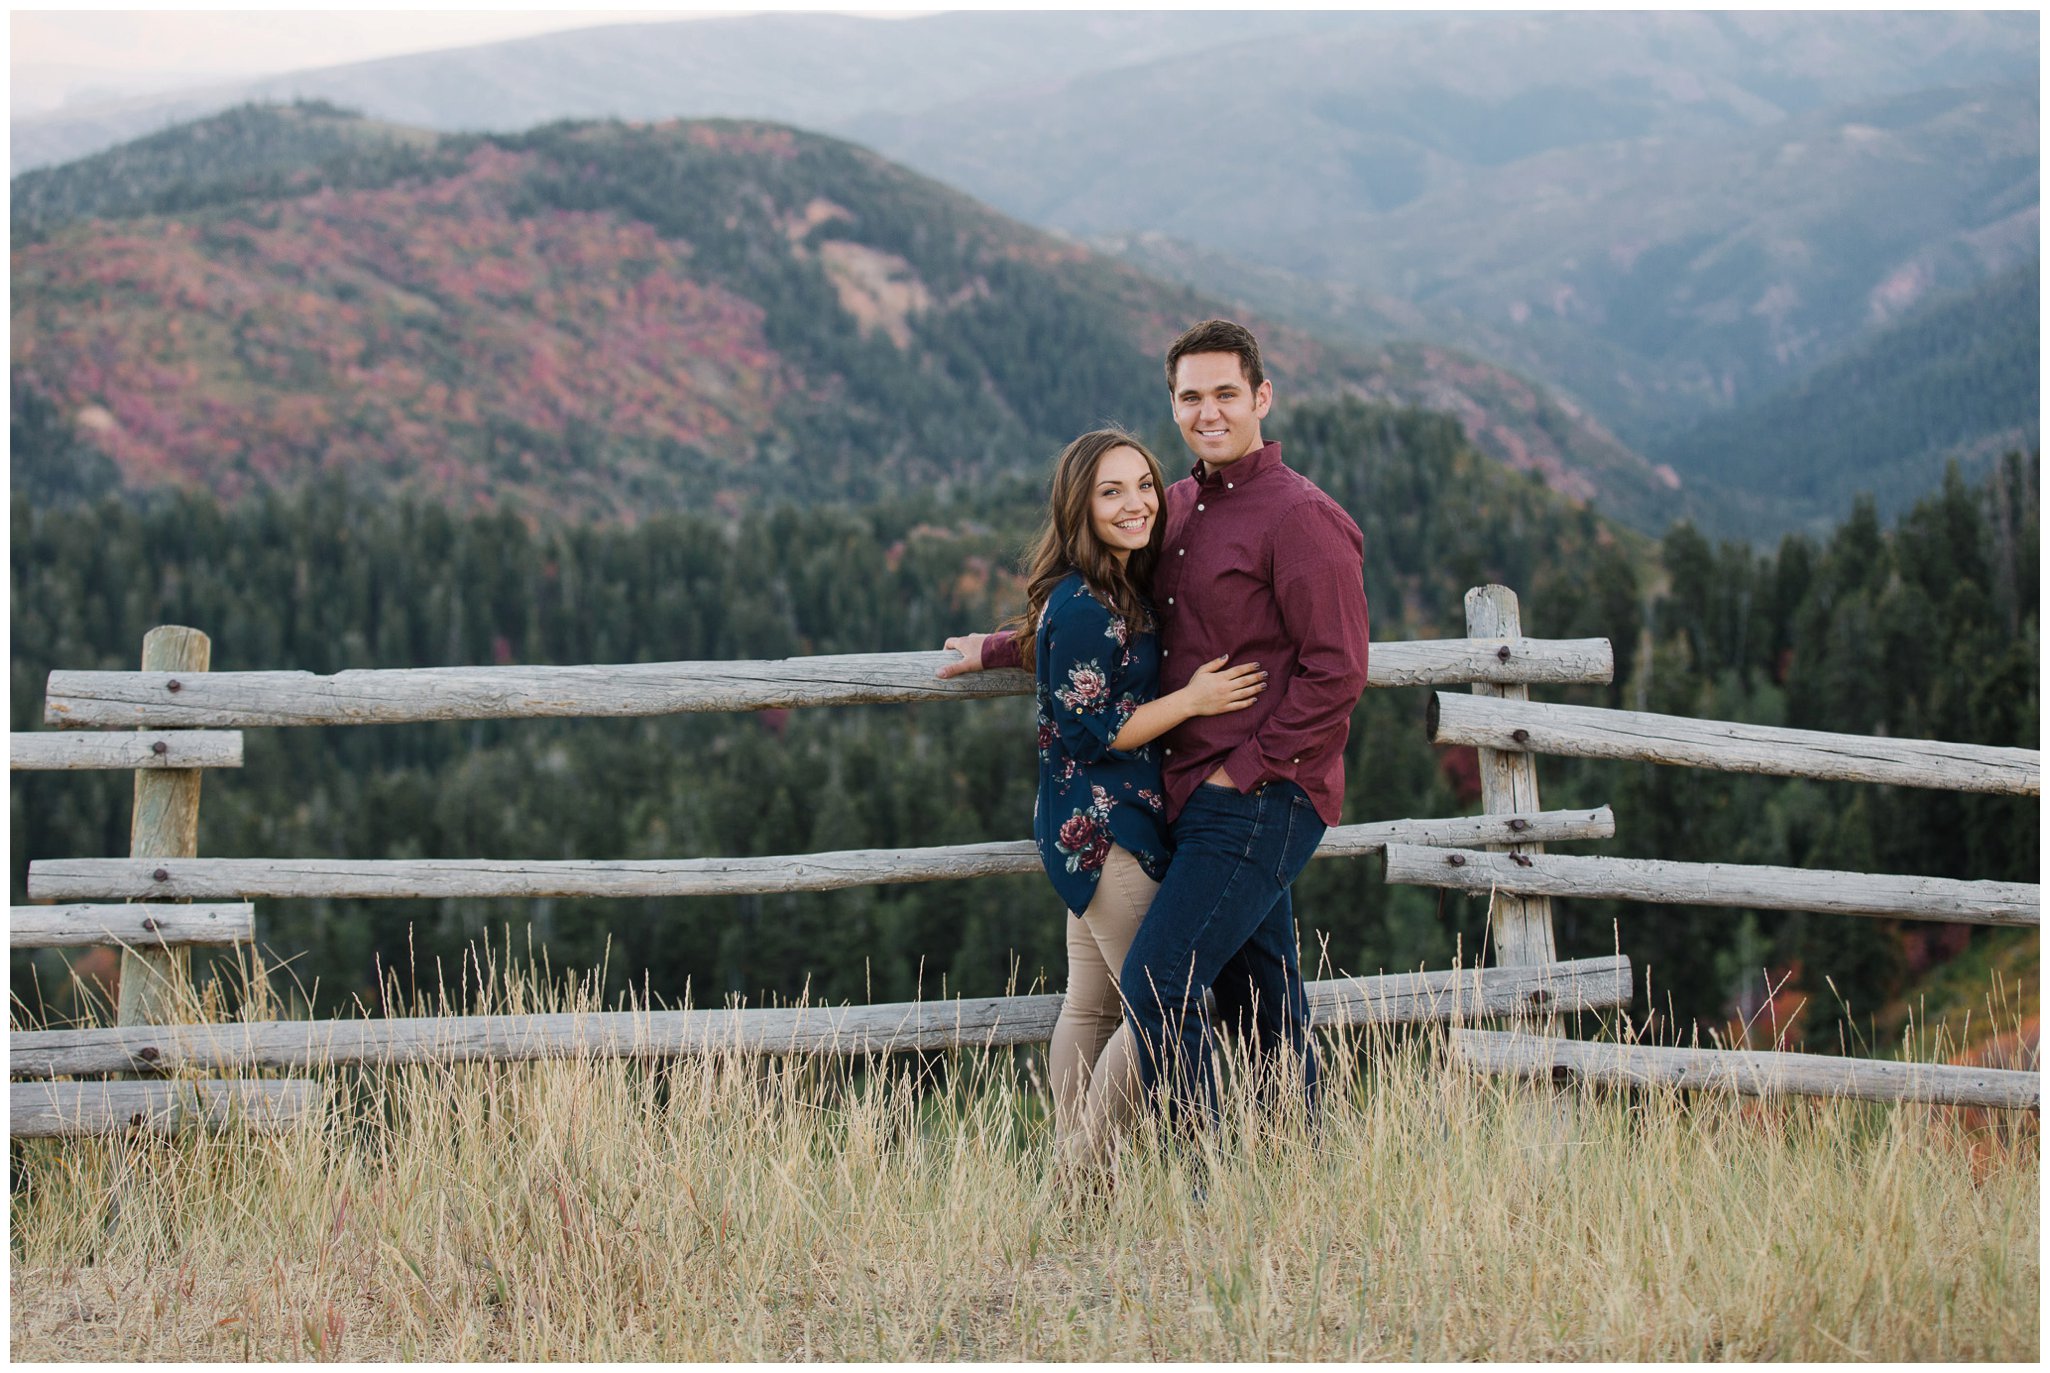 Jamie Tervort Photography | Colton and Avonlea | Utah Engagement Session | Payson Canyon, UT | Utah Wedding Photography